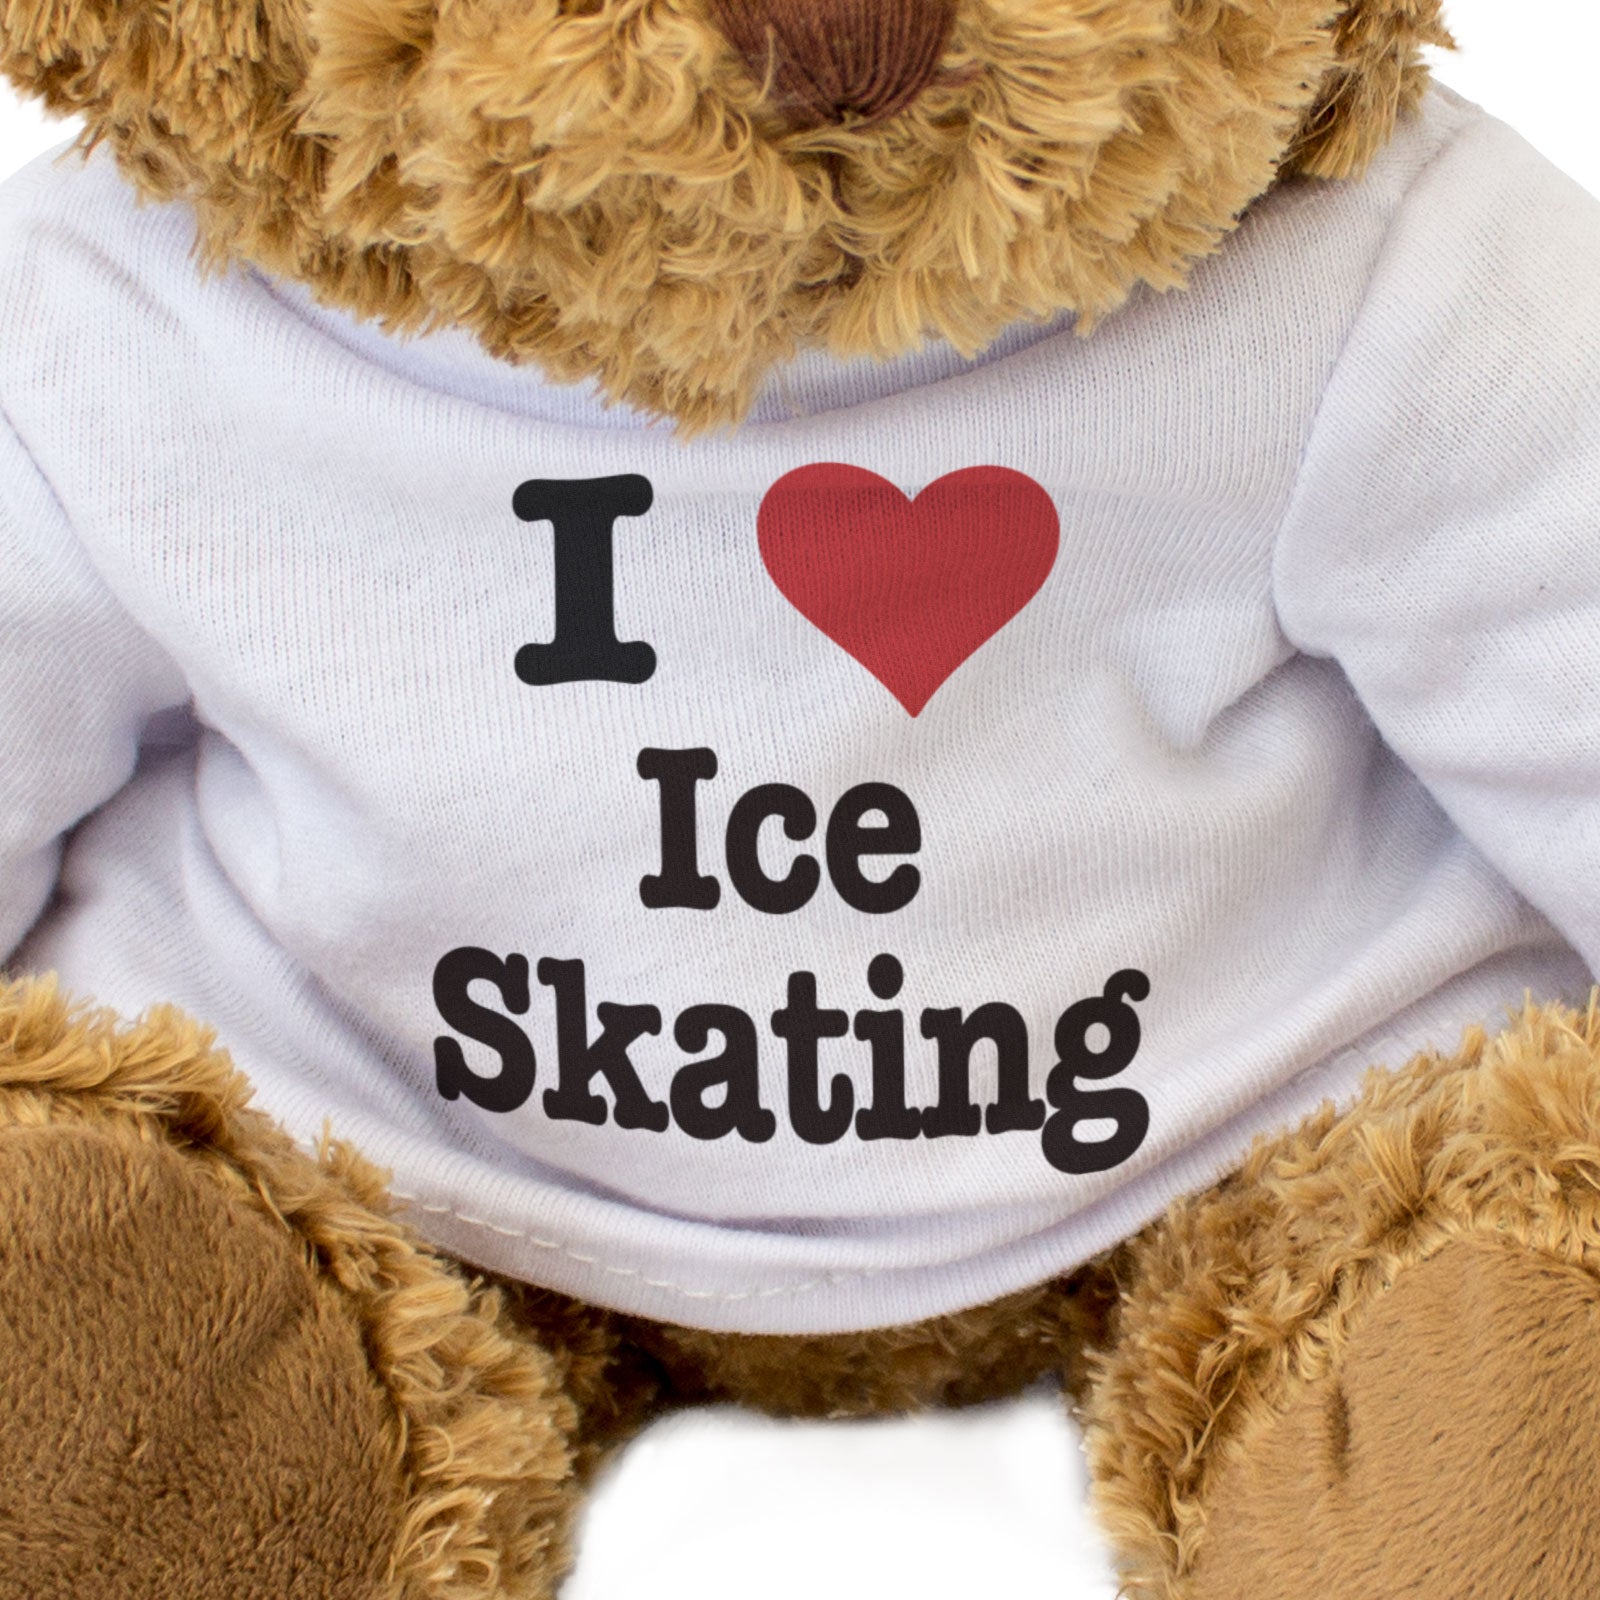 I Love Ice Skating - Teddy Bear